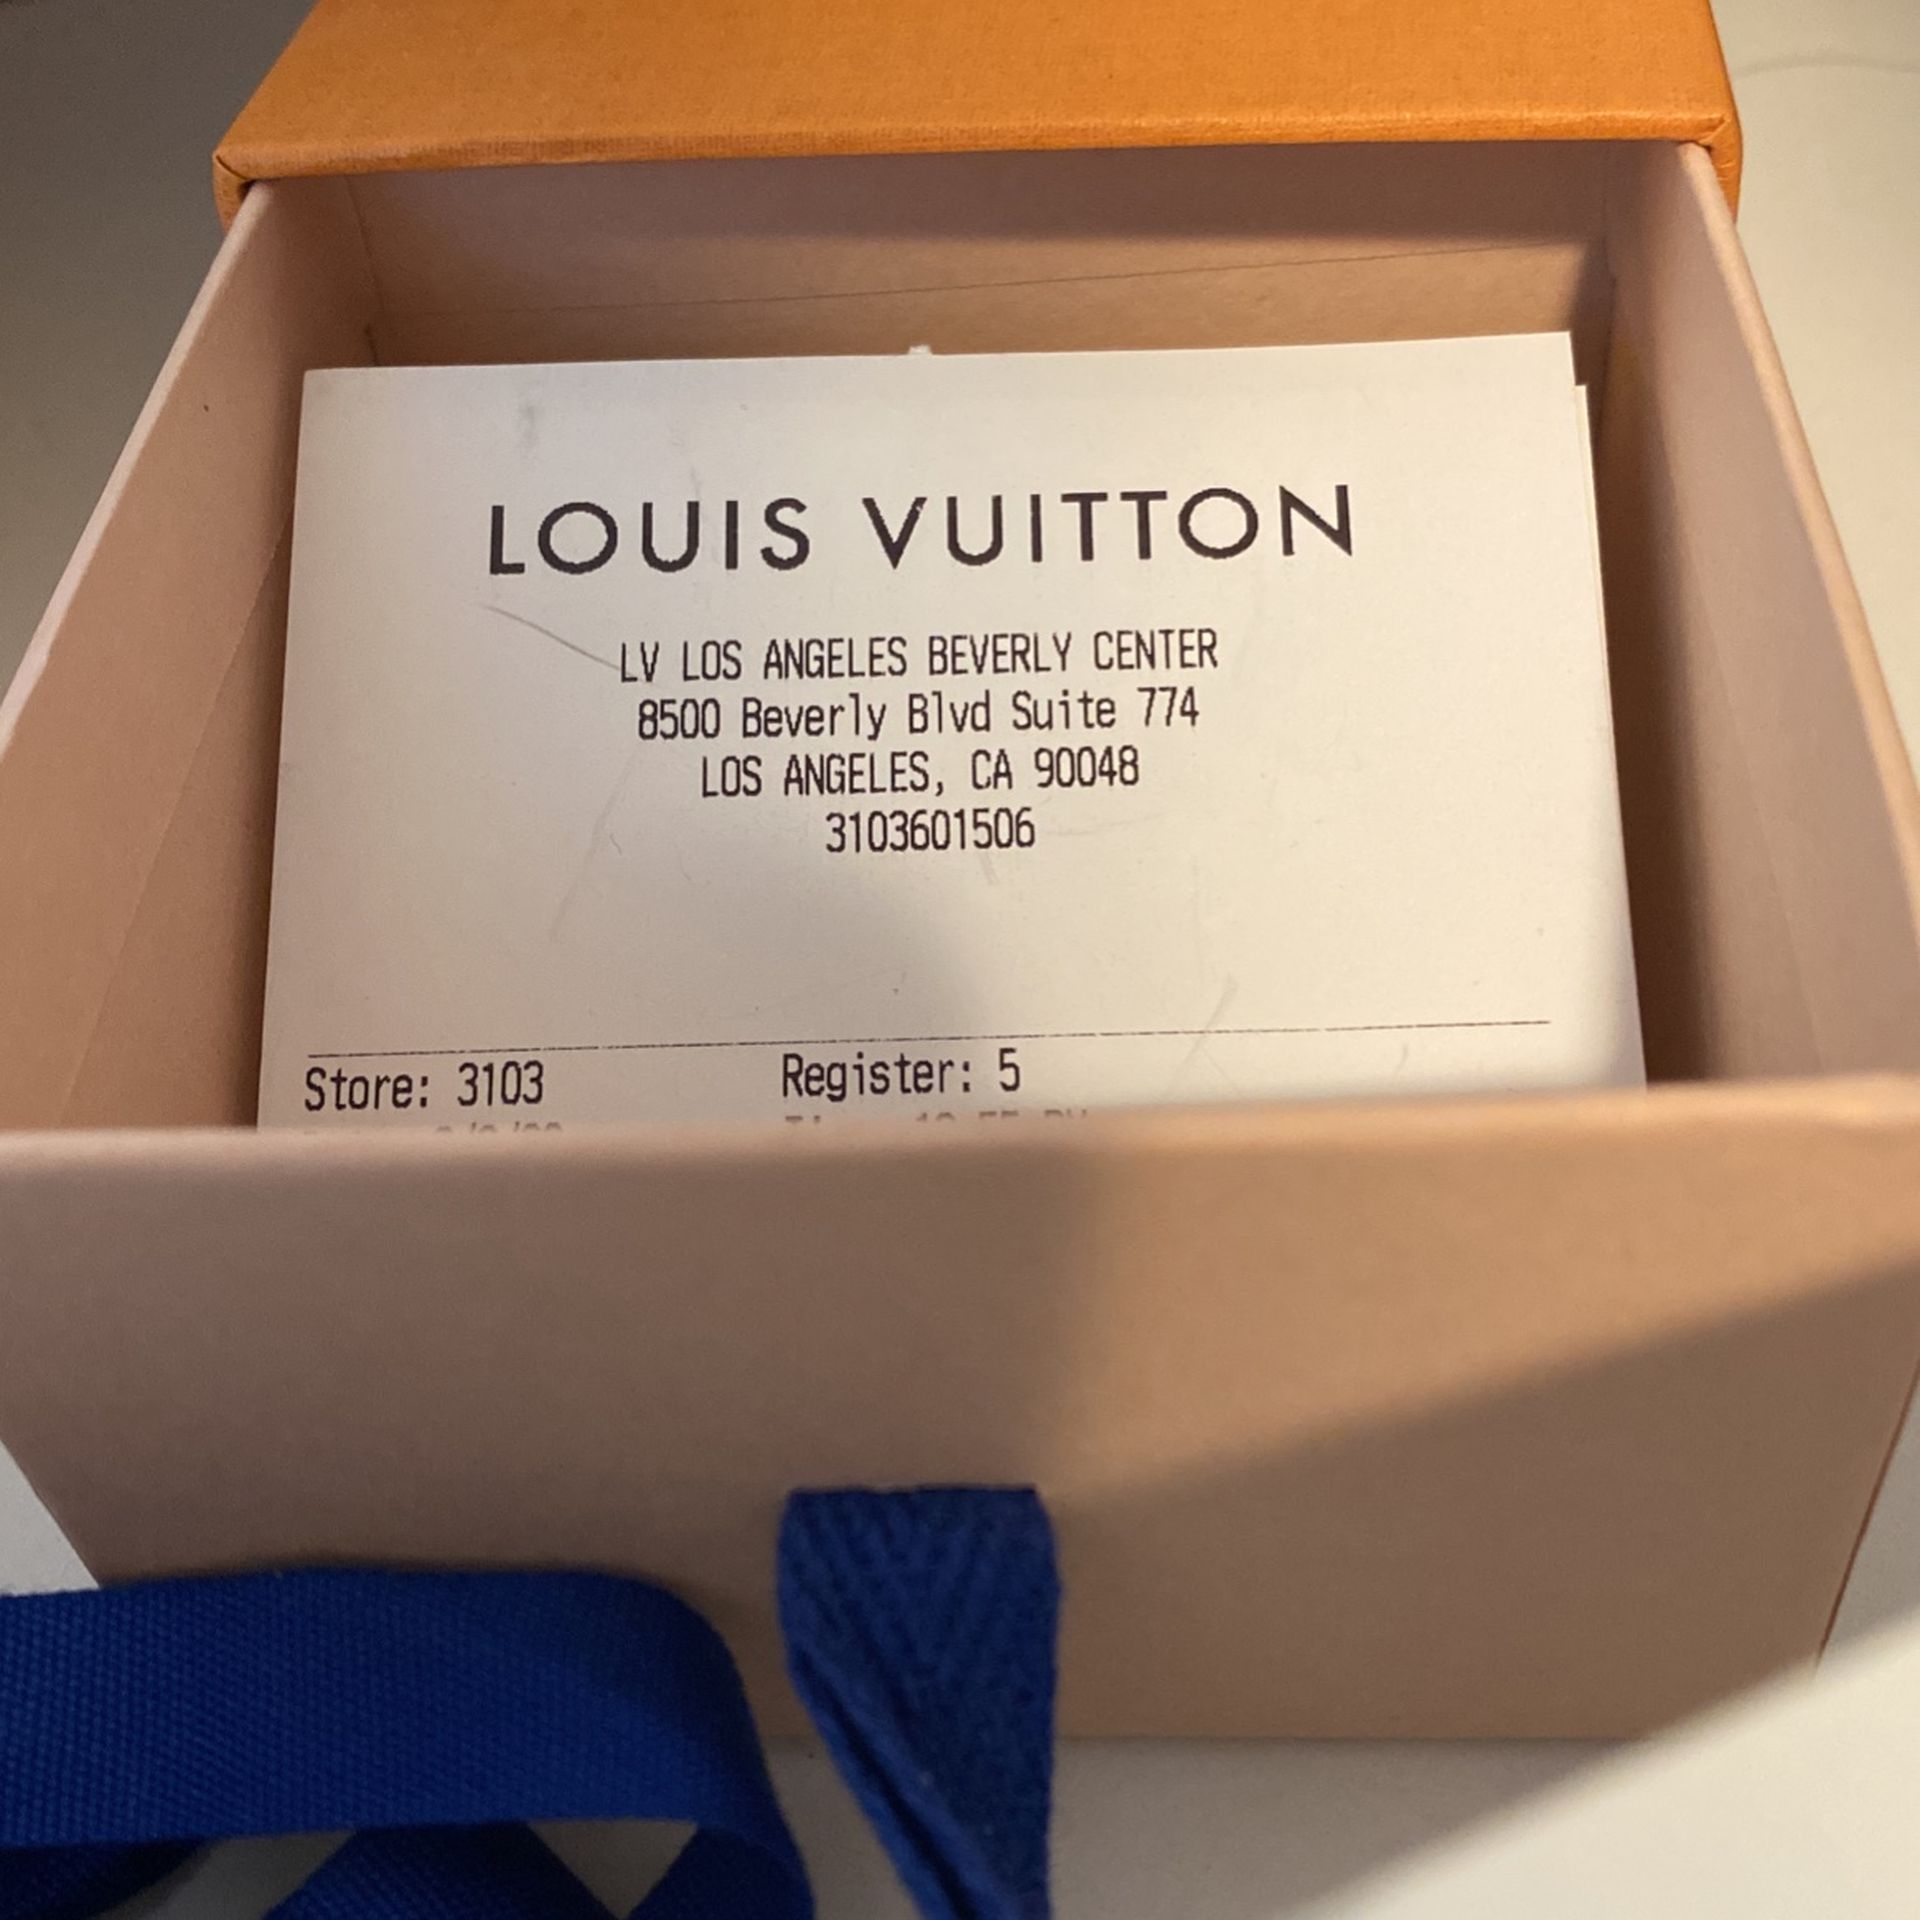 Louis Vuitton Louise Earrings - For Sale on 1stDibs  louise pm earrings,  women louis vuitton authenticated louise earrings metal, louis vuitton  earrings